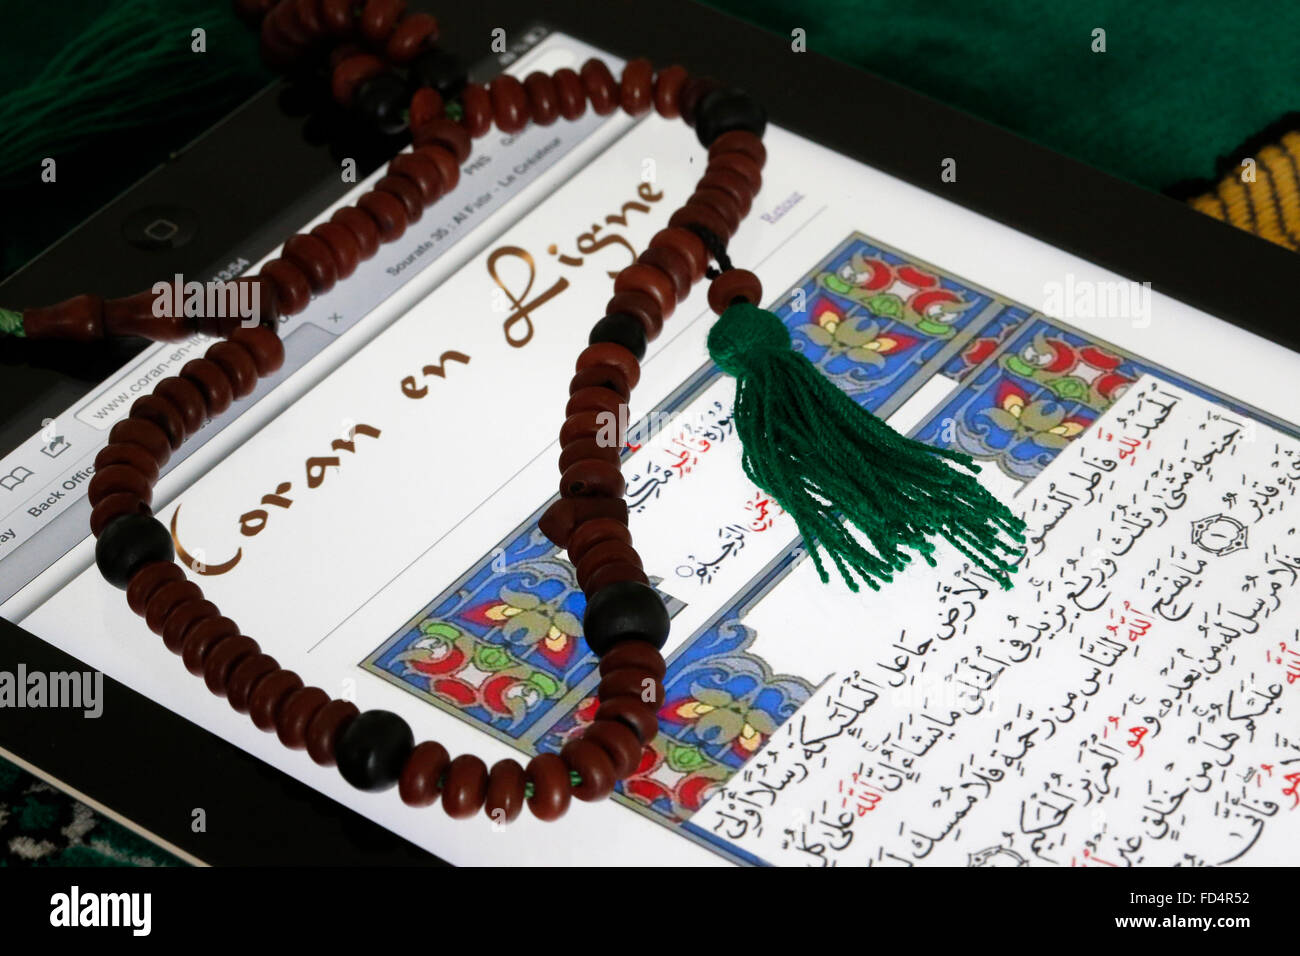 Electronic Quran on an Ipad. Stock Photo